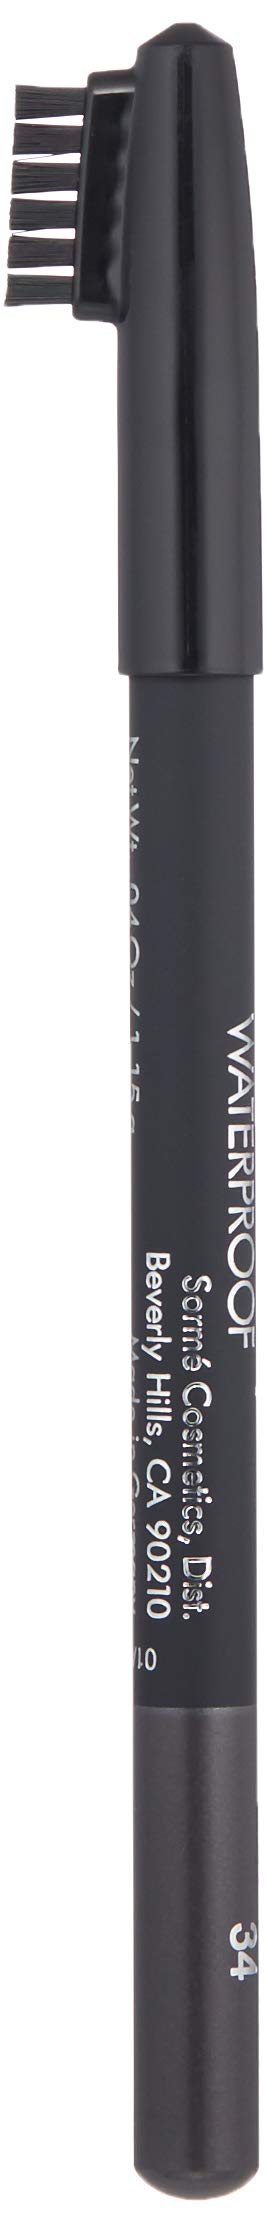 Sorme Cosmetics Waterproof Natural Defining Eyebrow Pencil